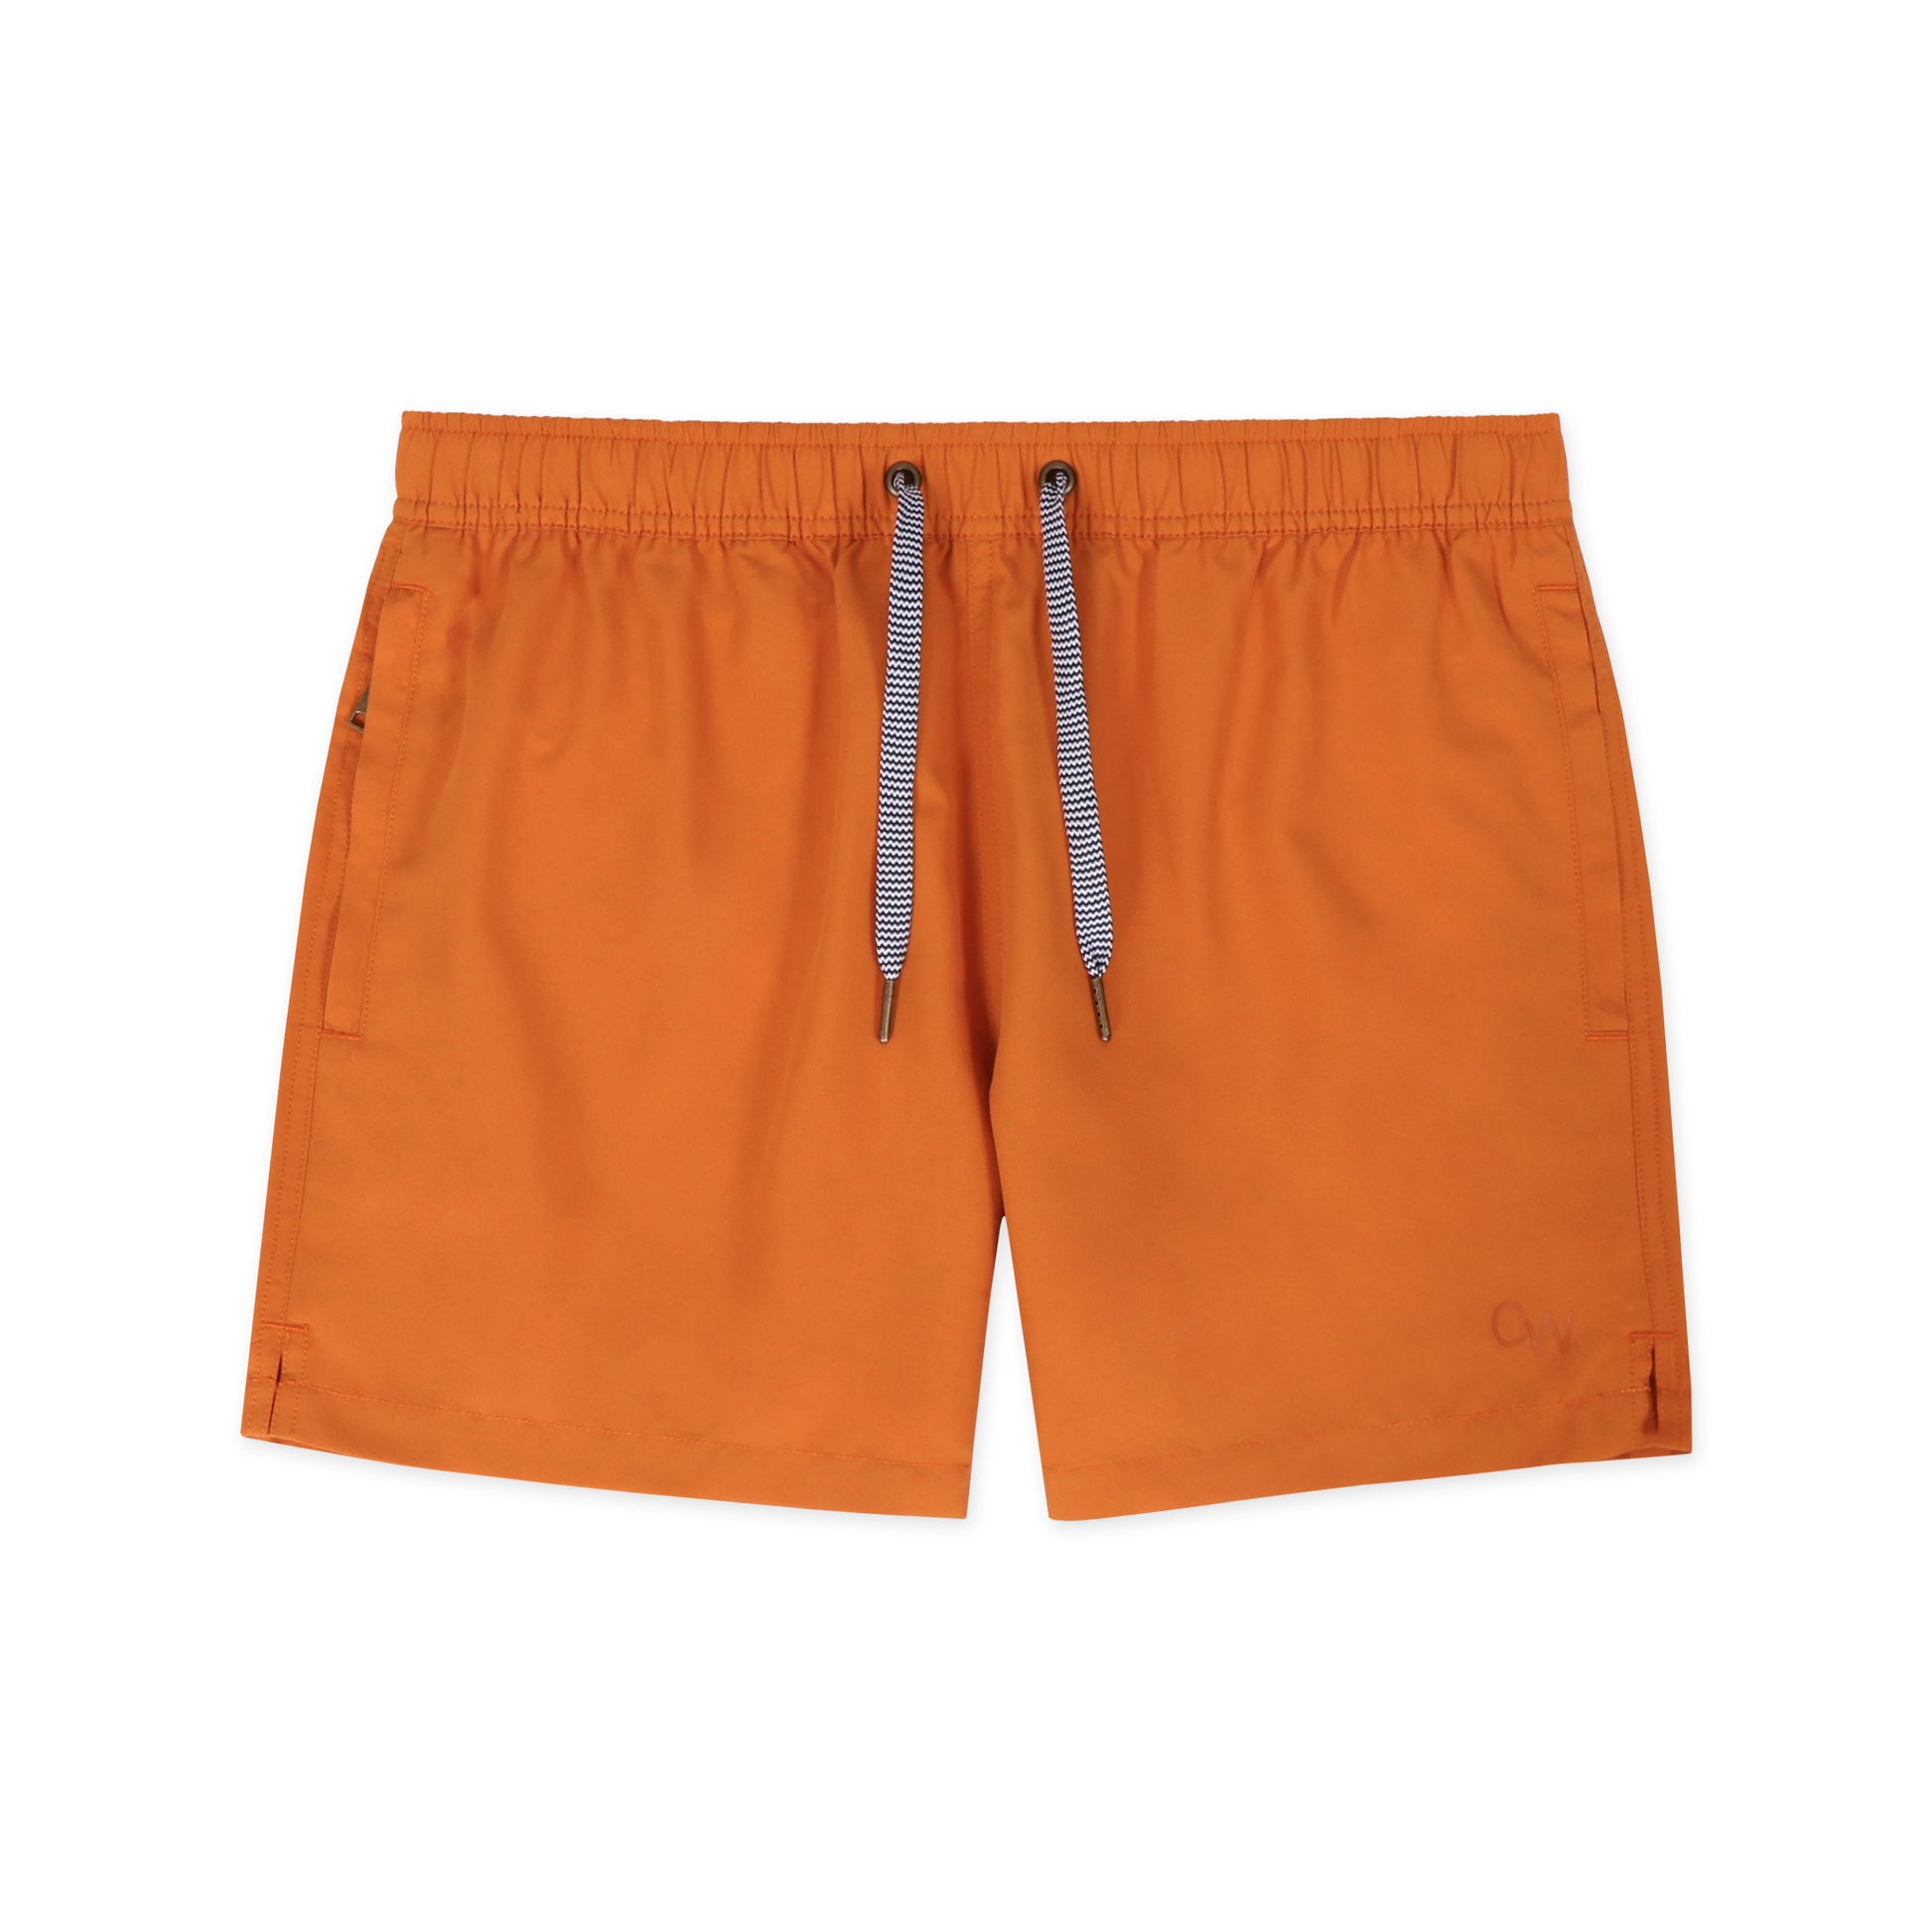 Original Weekend Sustainable Men's Swim Short in Amber Ale Orange Flat Lay